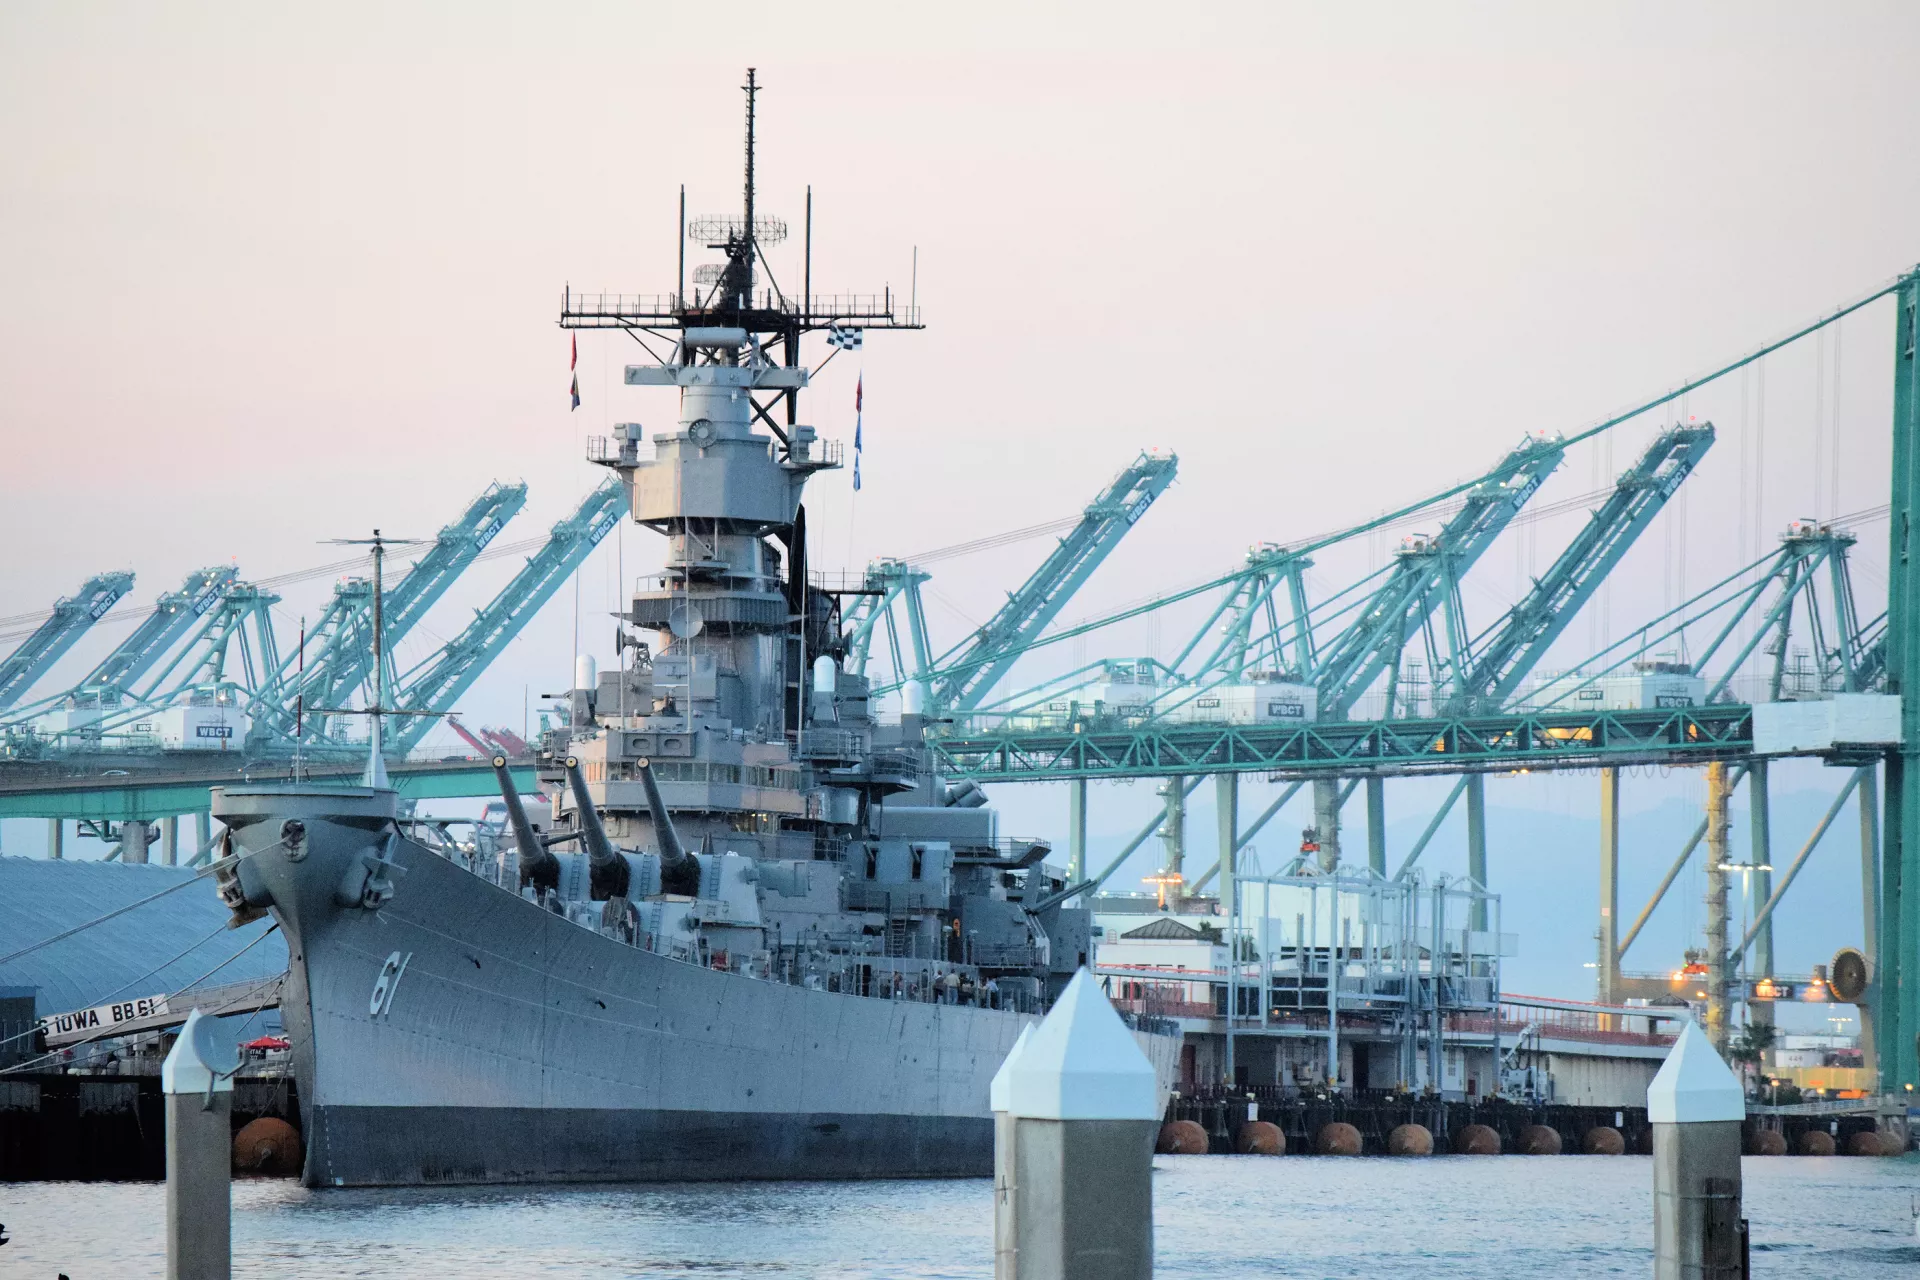 USS Iowa Battleship docked at the San Pedro Harbor